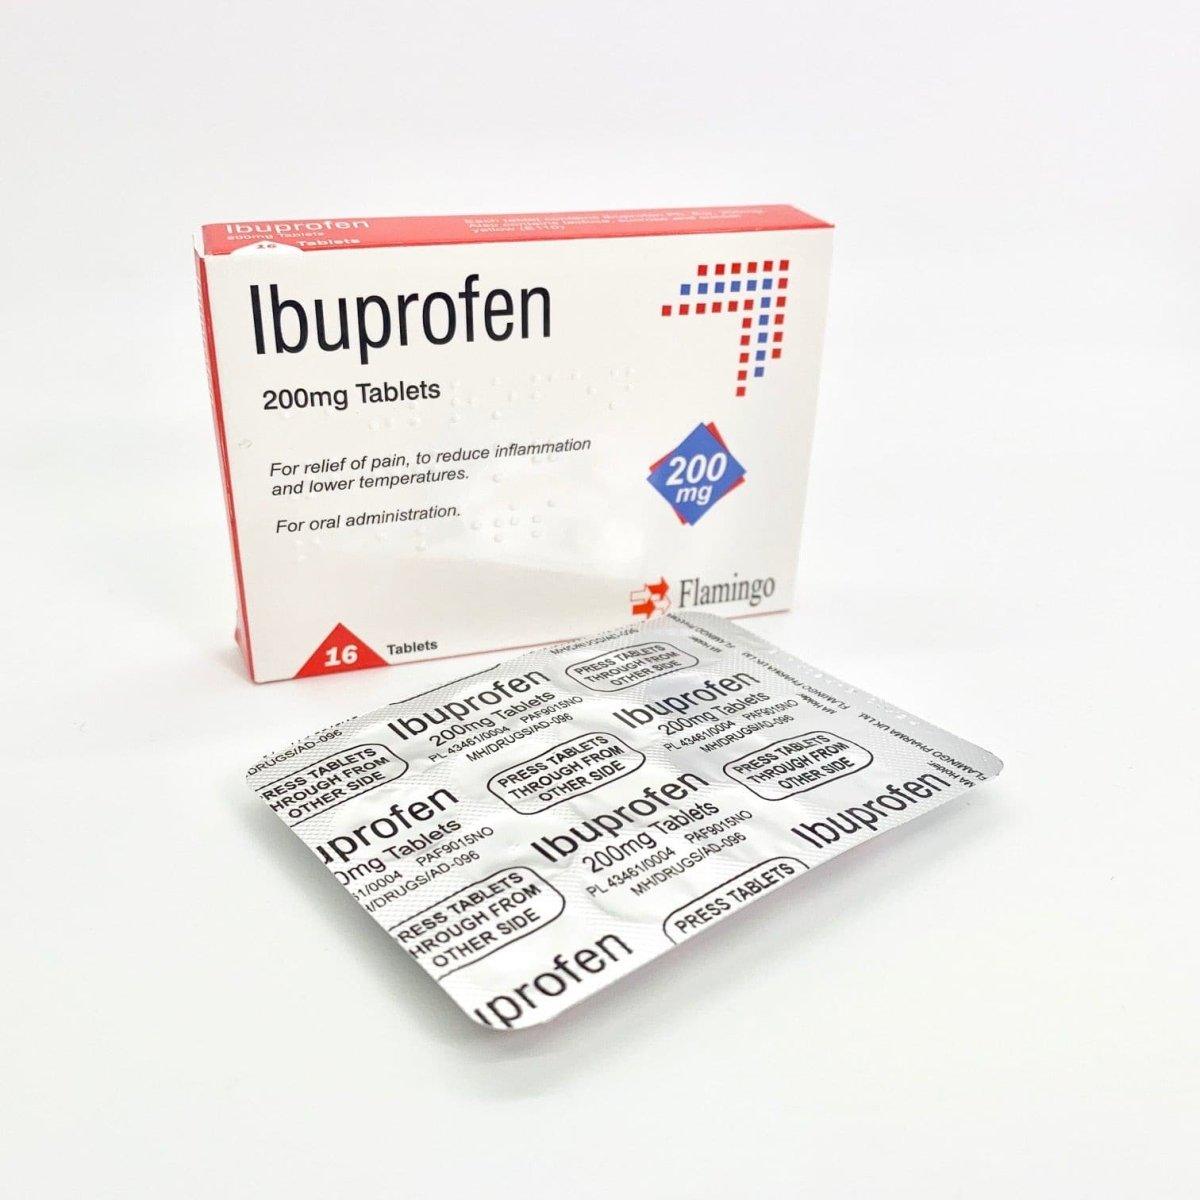 Ibuprofen 200mg tablets - Rightangled